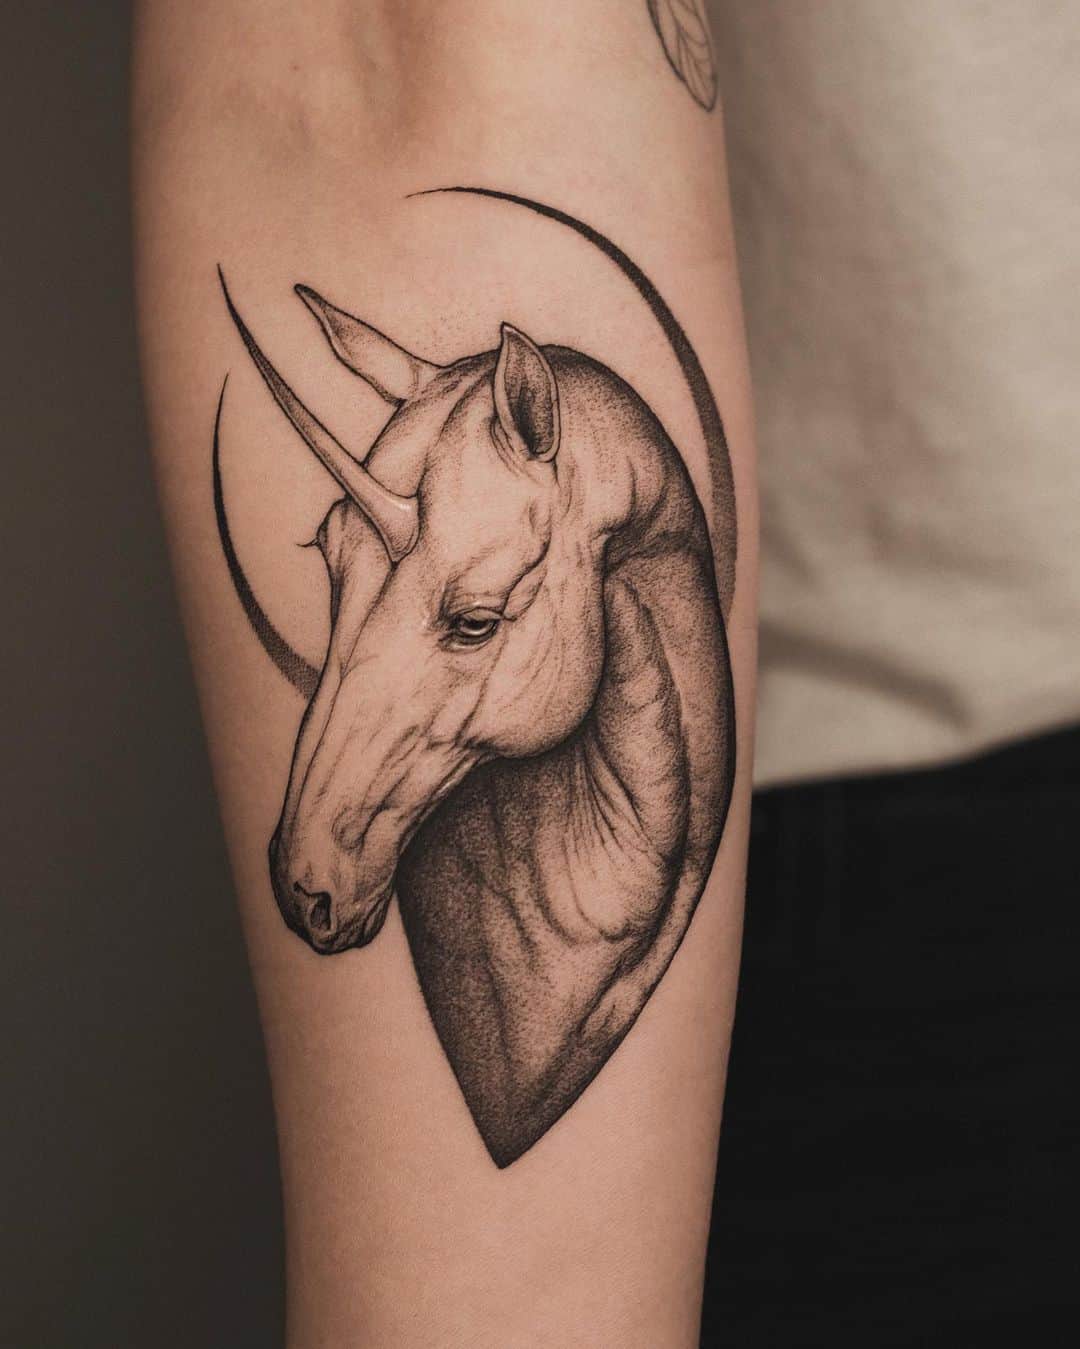 Amazing unicorn tattoo by lama del ray